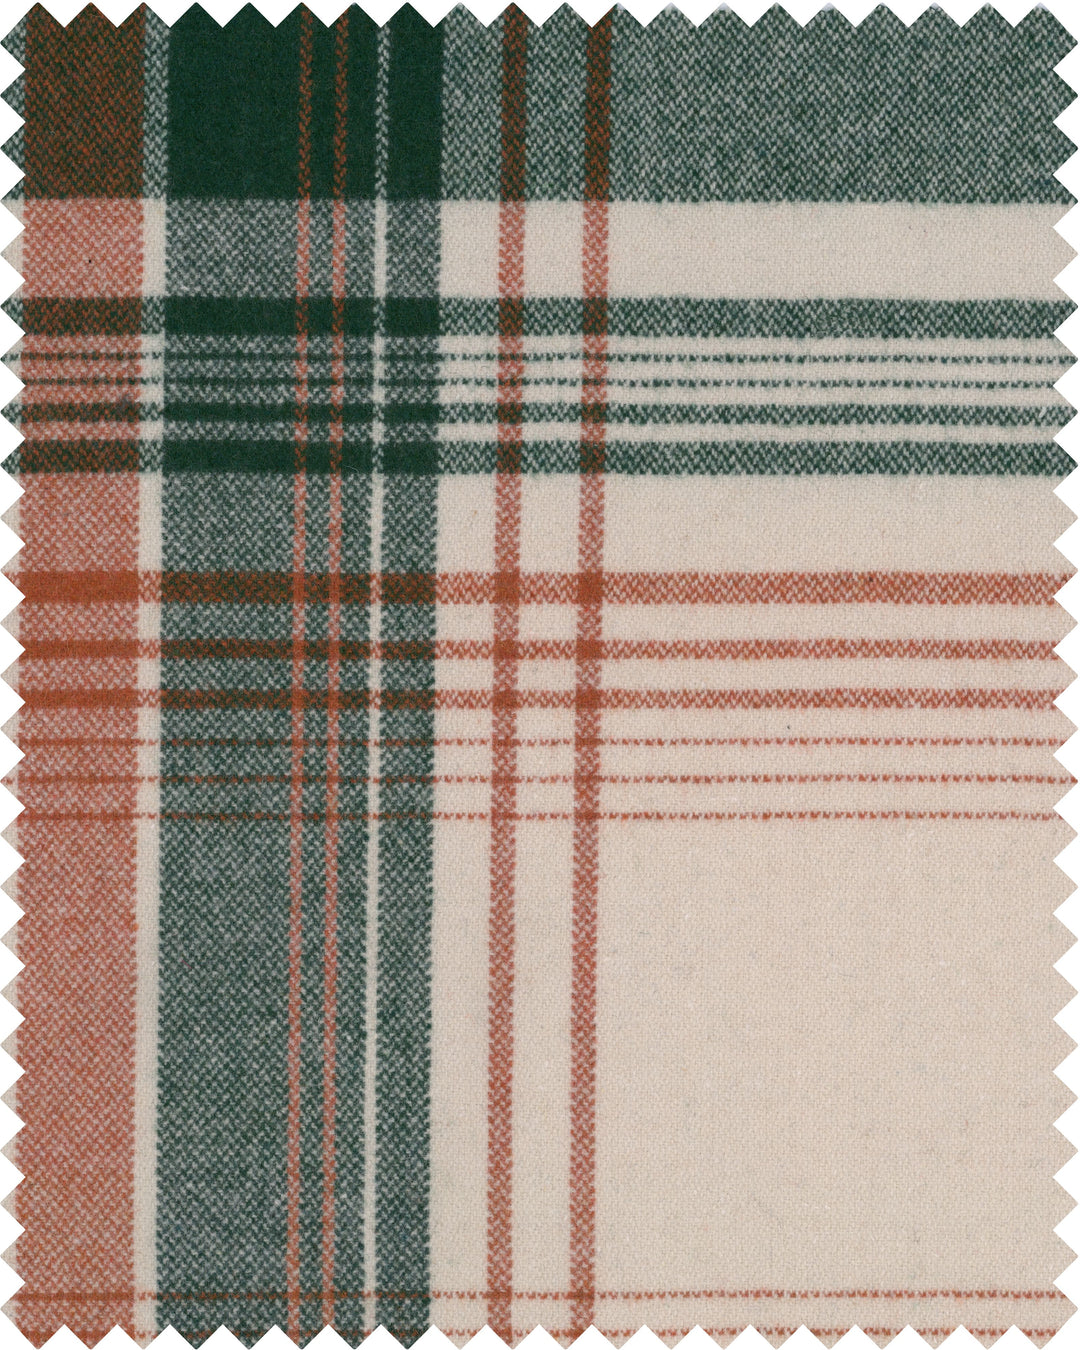 mind-the-gap-woodstock-fabrics-monterey-woven-check-wool-green-orange-cream-fabric